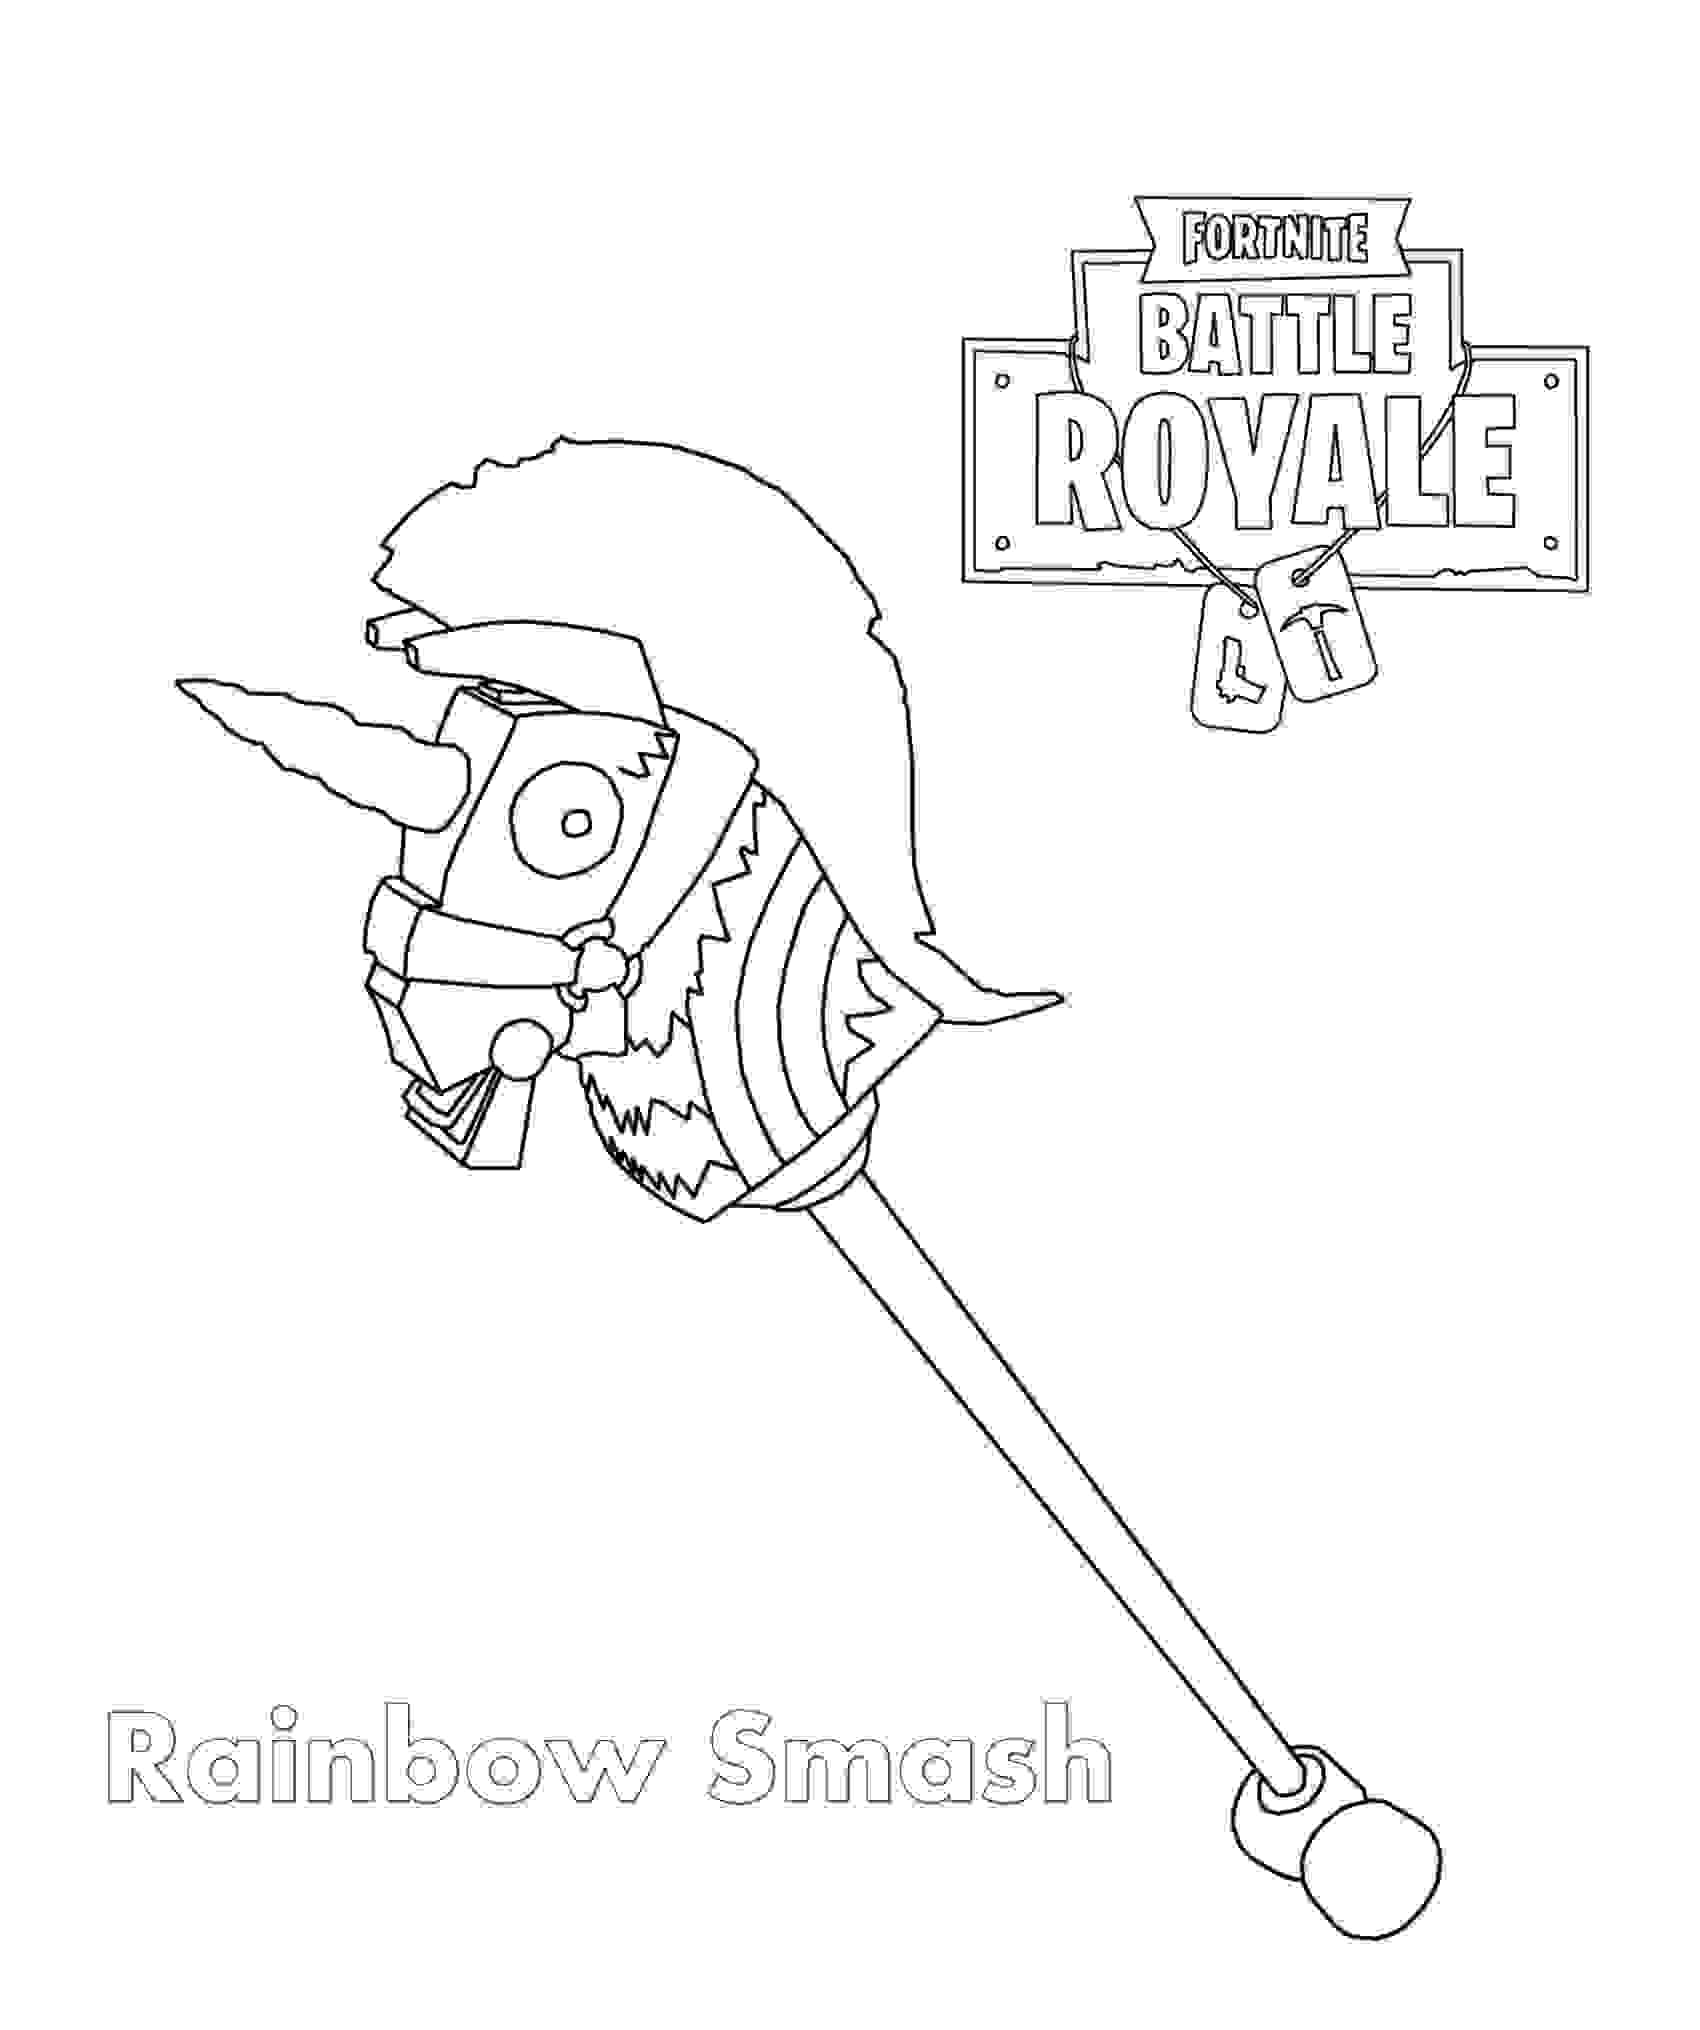 Rainbow Smash Pickaxe 是 Fortnite 的 Fortnite Battle Royale 中的史诗收割工具